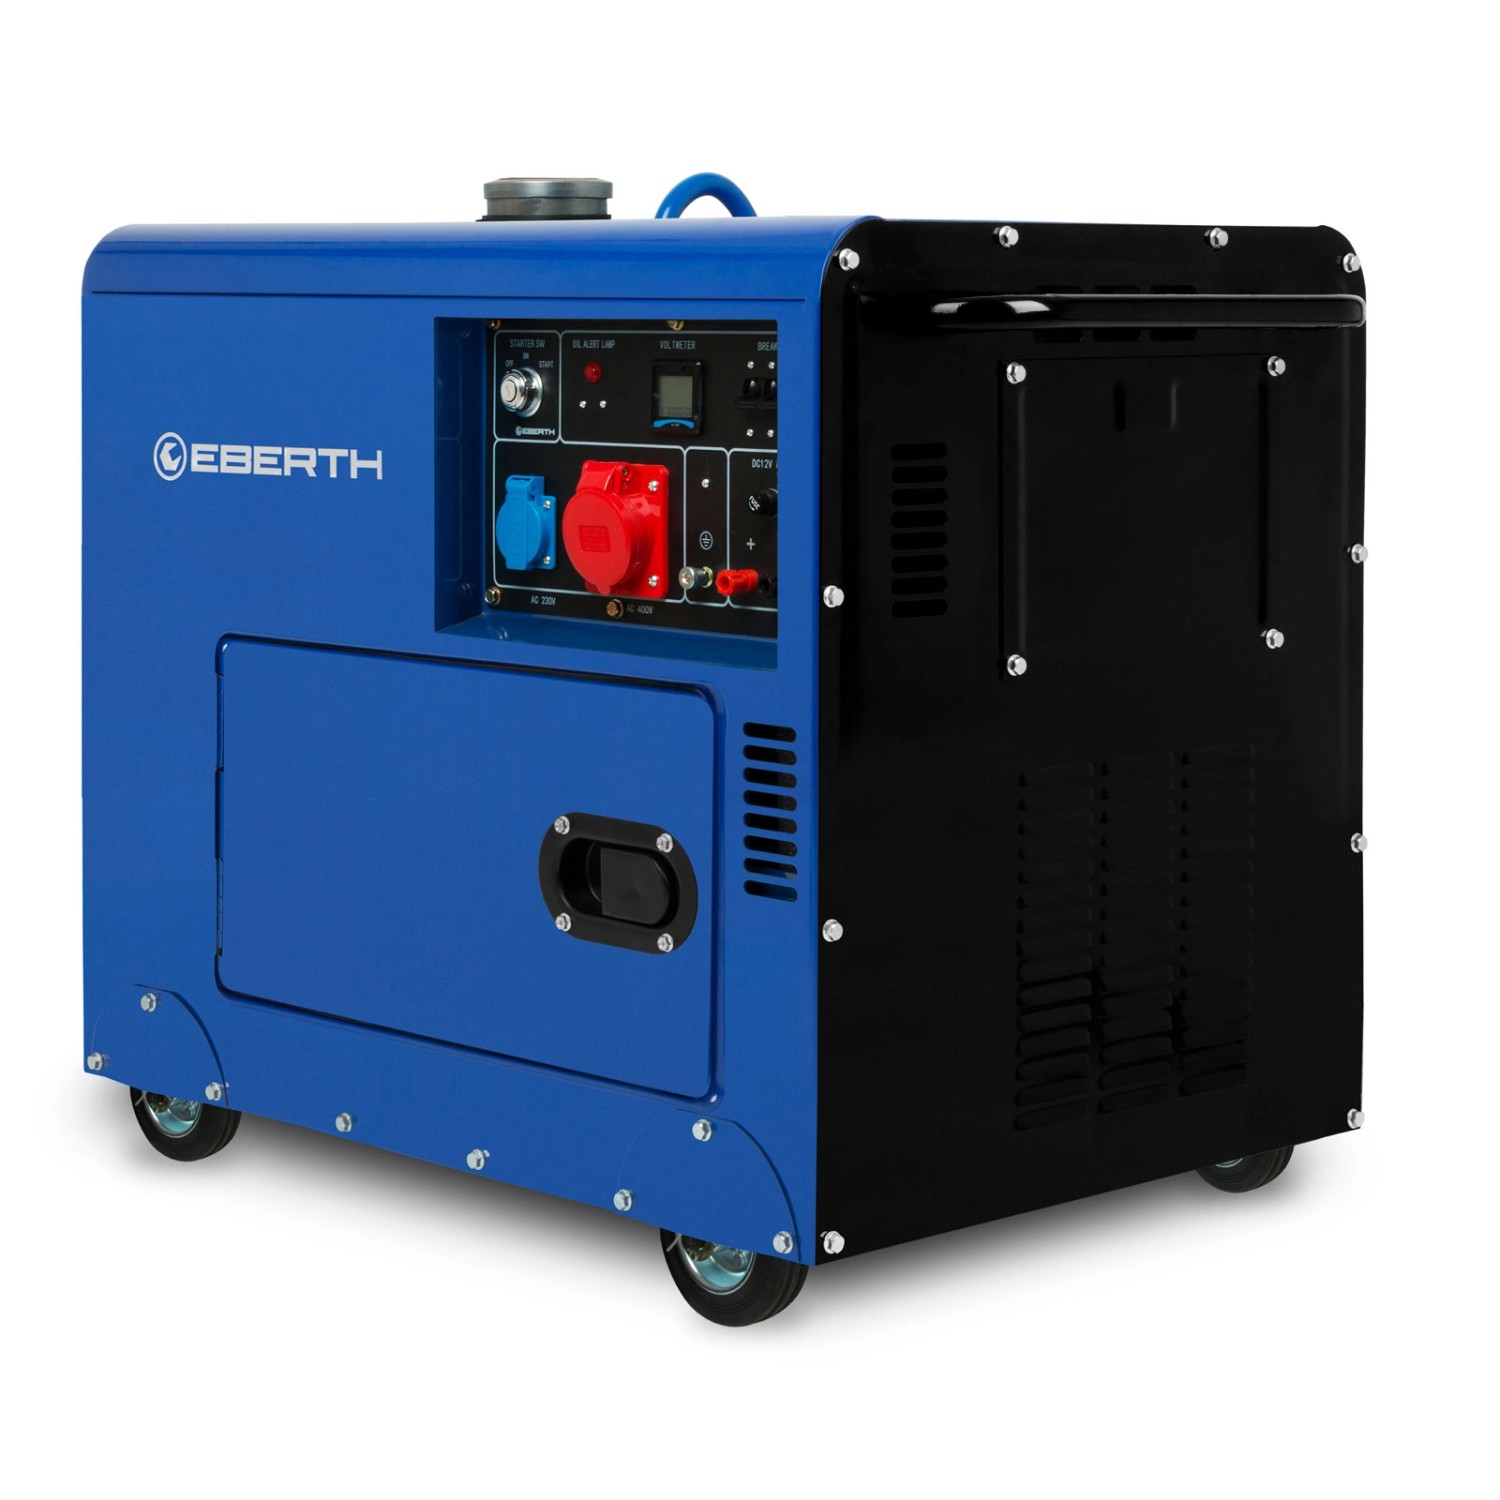 EBERTH Notstromaggregat 5000 Watt Diesel, 10 PS Motor, 4-Takt, E-Start, 1x 400V, 1x 230V, 1x 12V